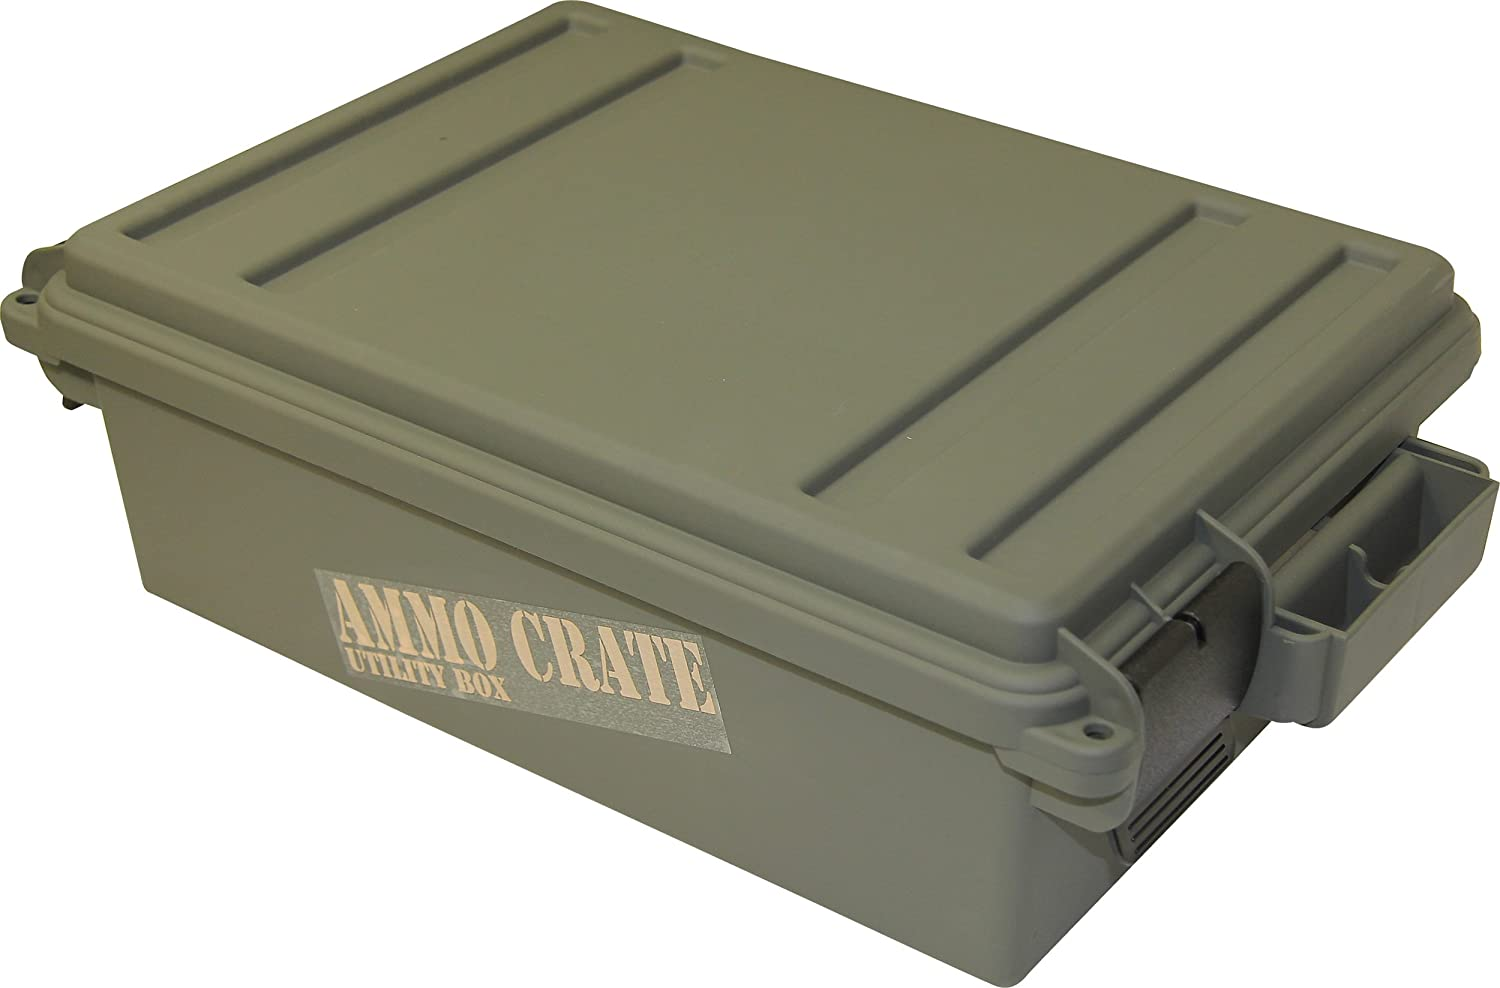 Amazon.com: MTM ACR4-18 Ammo Crate Utility Box,Green,Medium $12.99